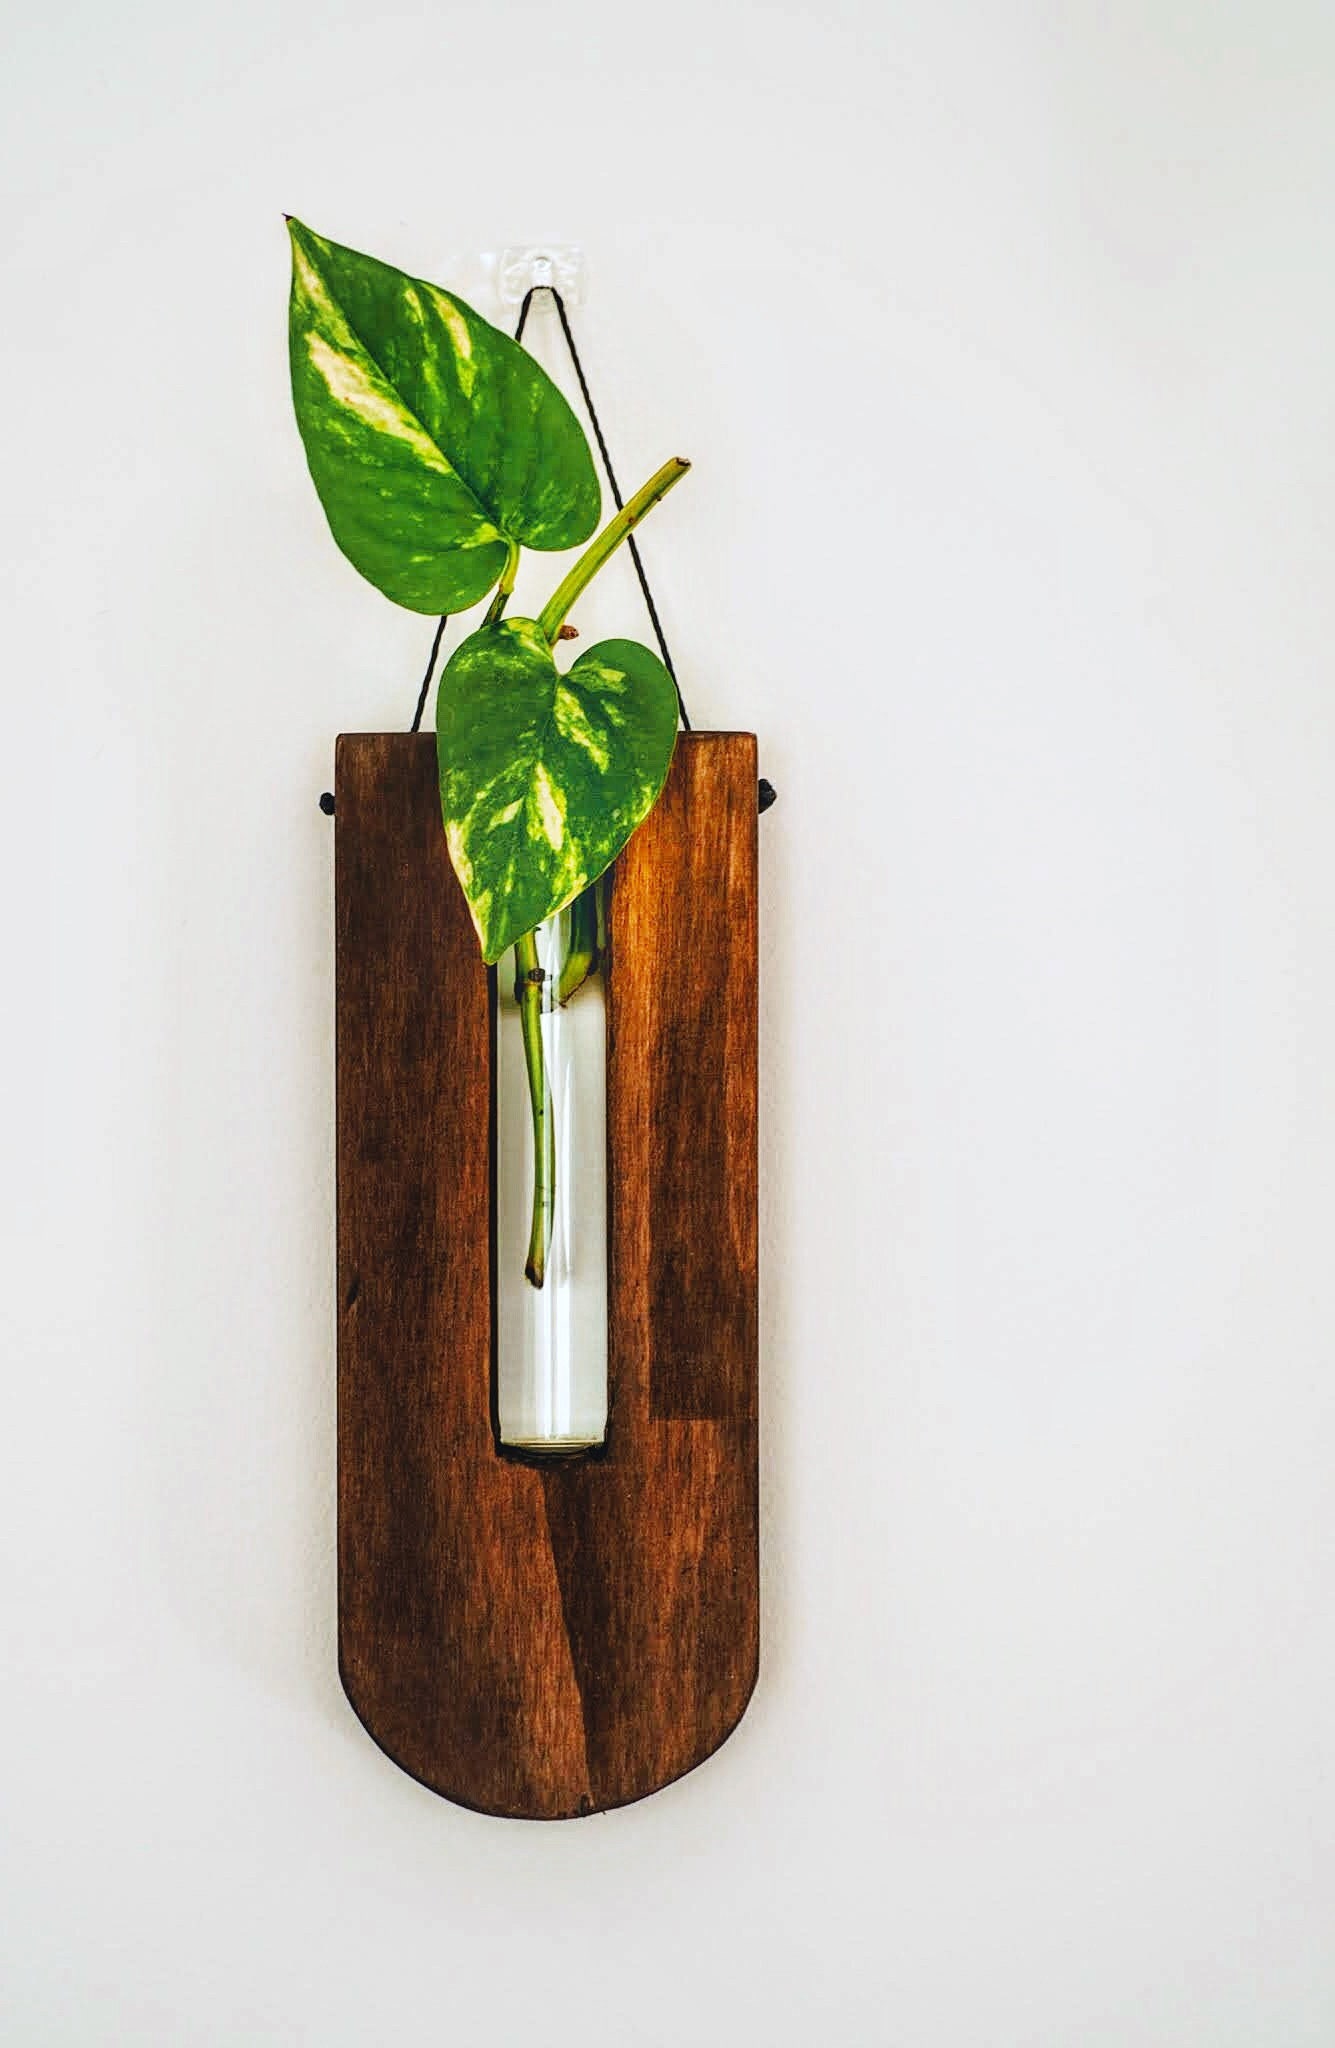 Wall decor / Propagation station / wooden vase/ Wall planter | Etsy